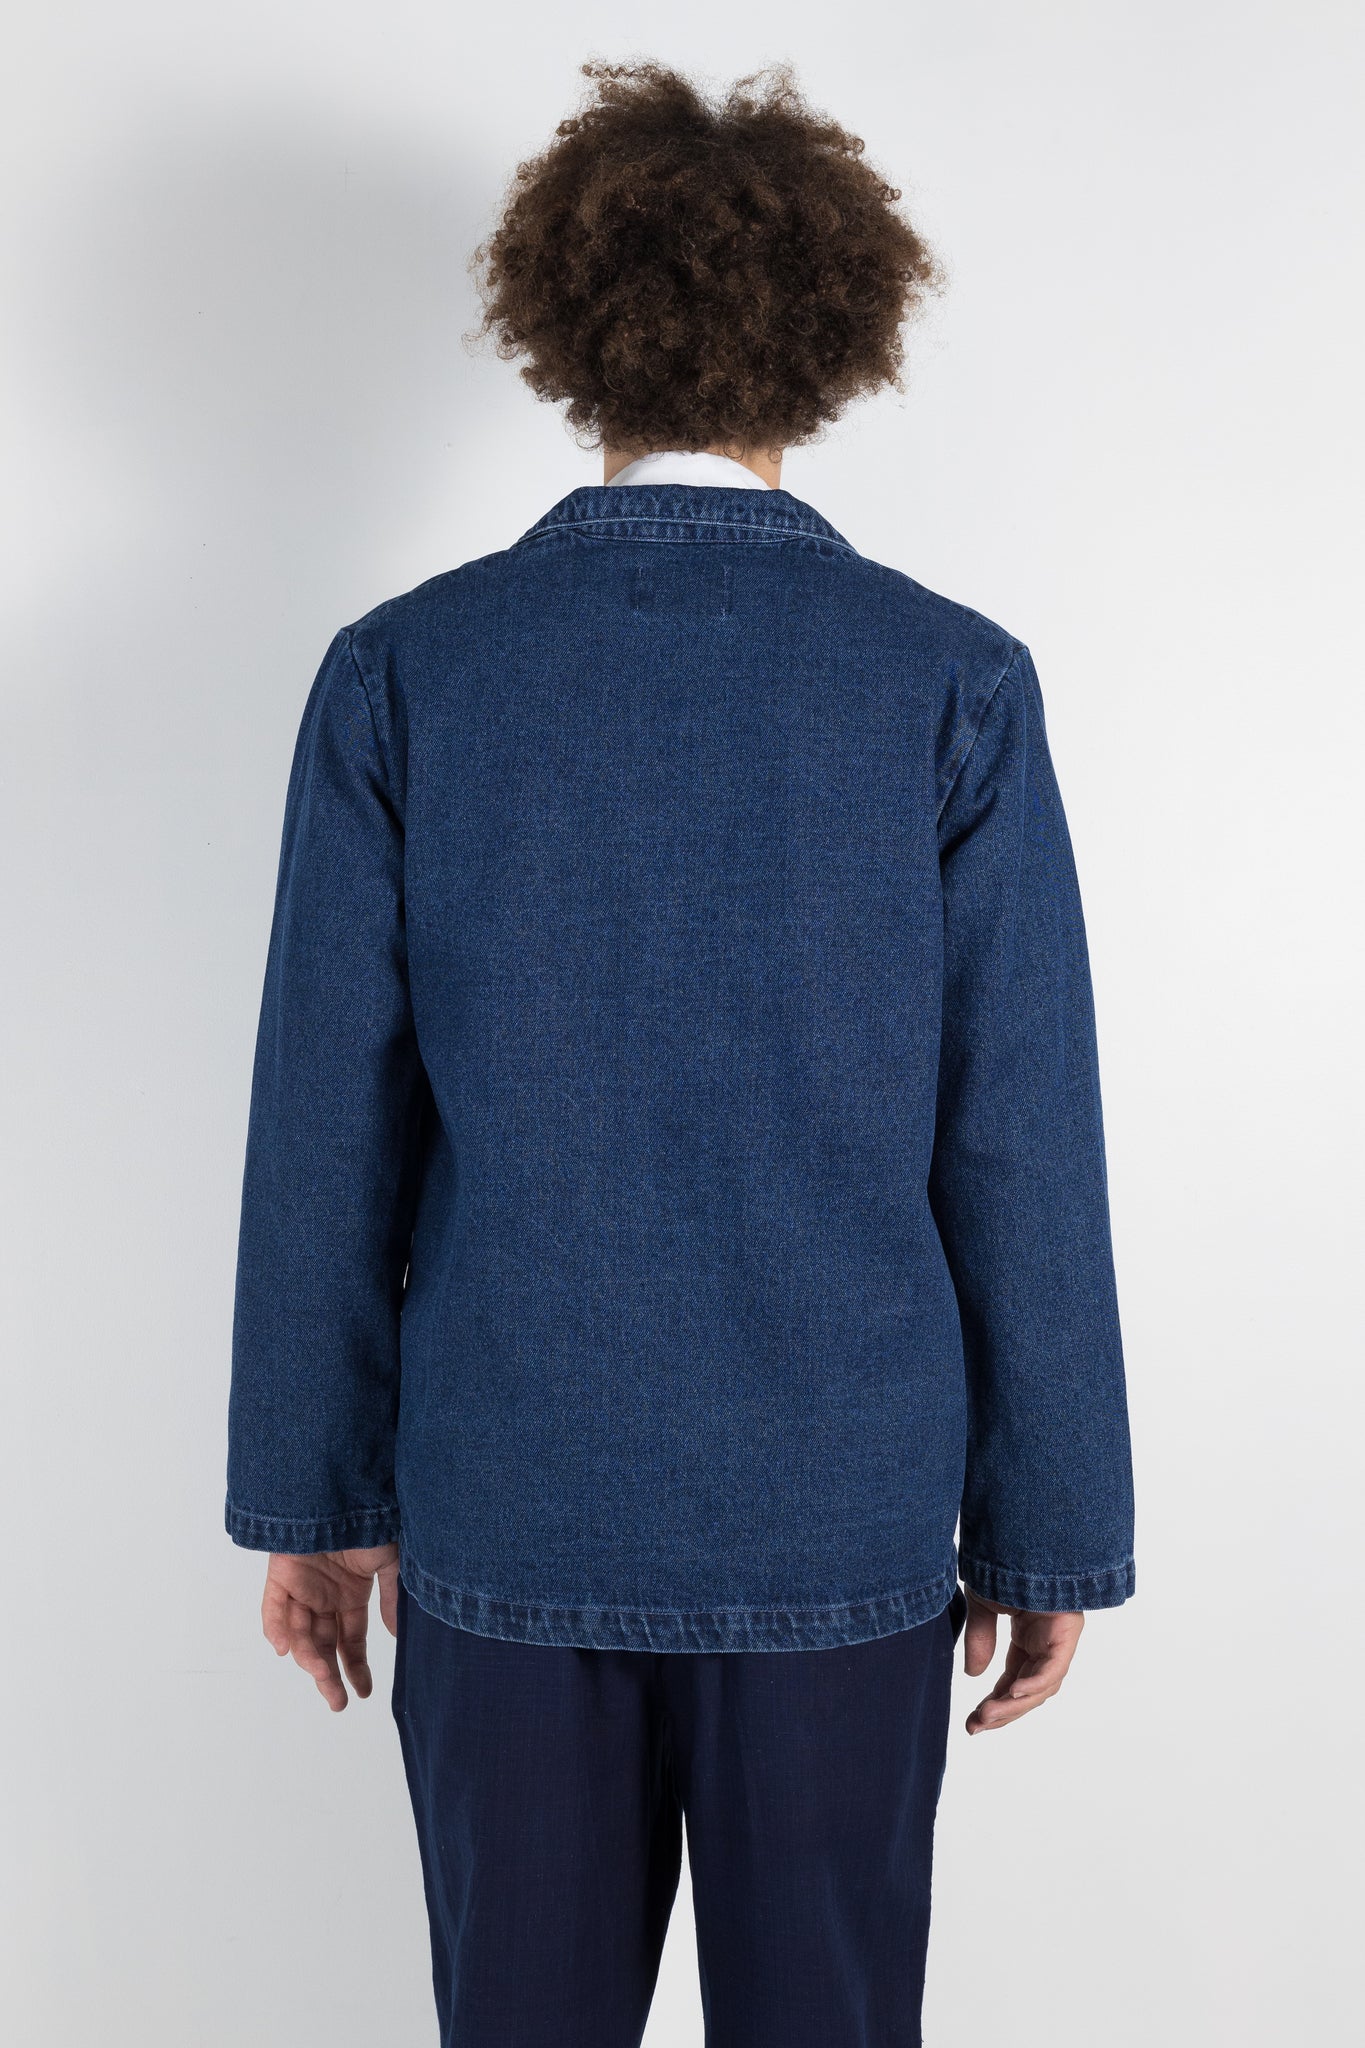 Mens Jacket | La Paz Sarmento jacket | The Standard Store